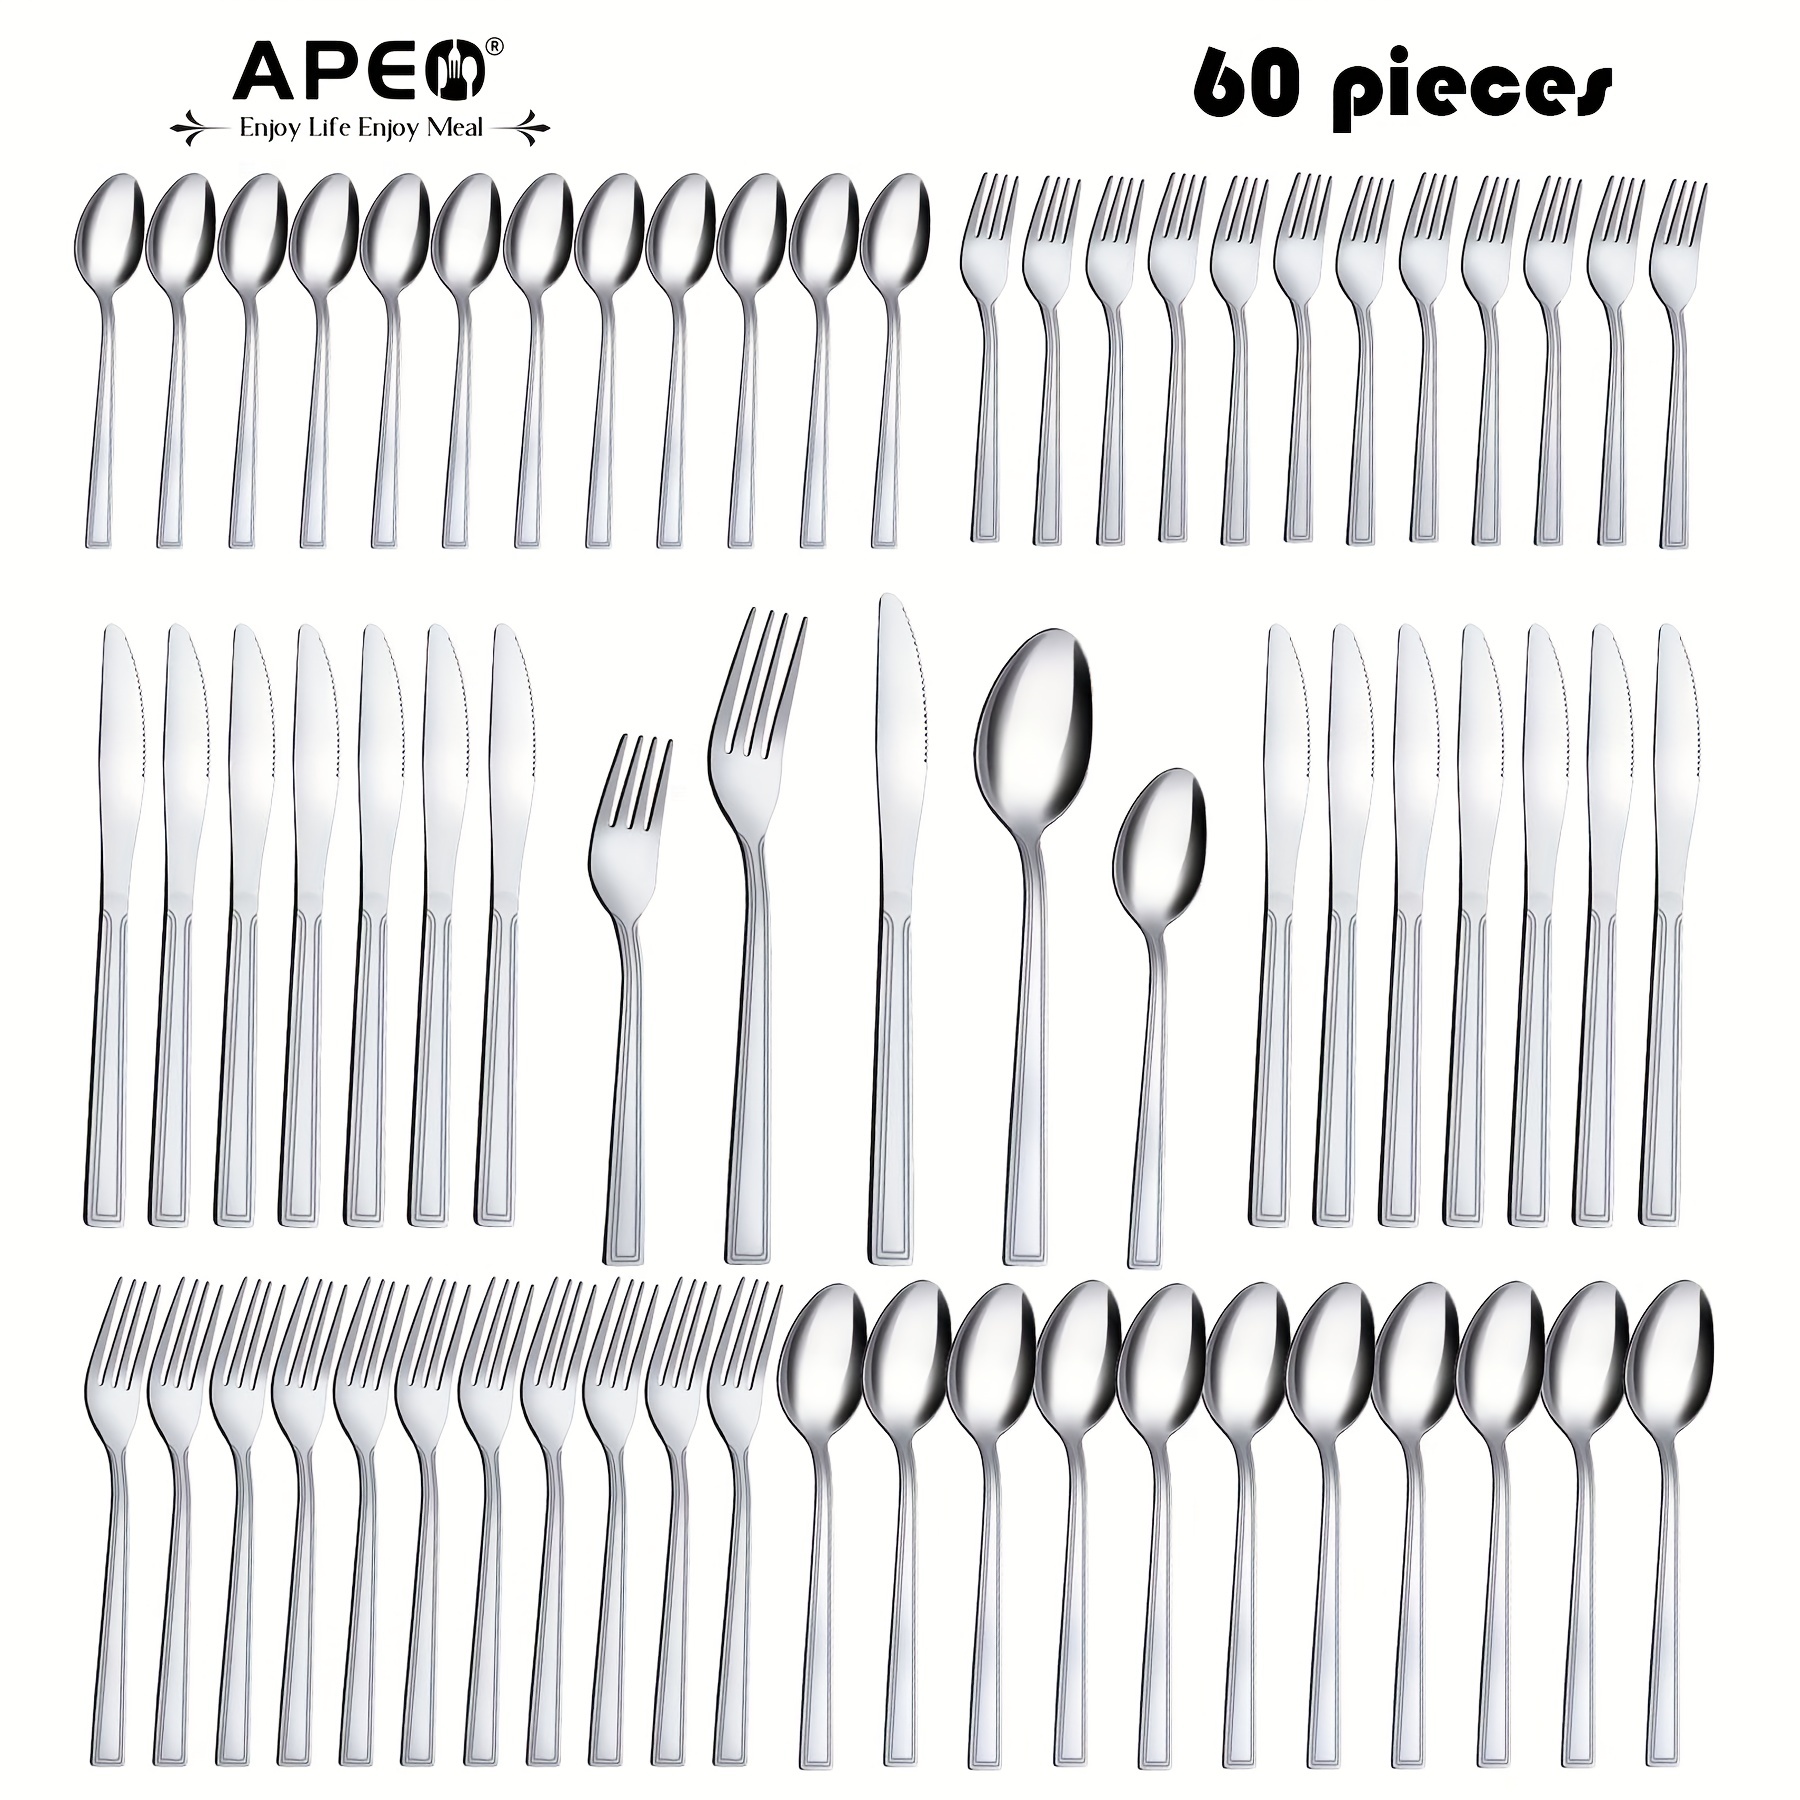 

60pcs Stainless Steel Square Flatware Set, Metal Cutlery Set, Dinner, Restaurant Supplies Including Knife/fork/spoon, Modern Design And Mirror Polished, Dishwasher Safe